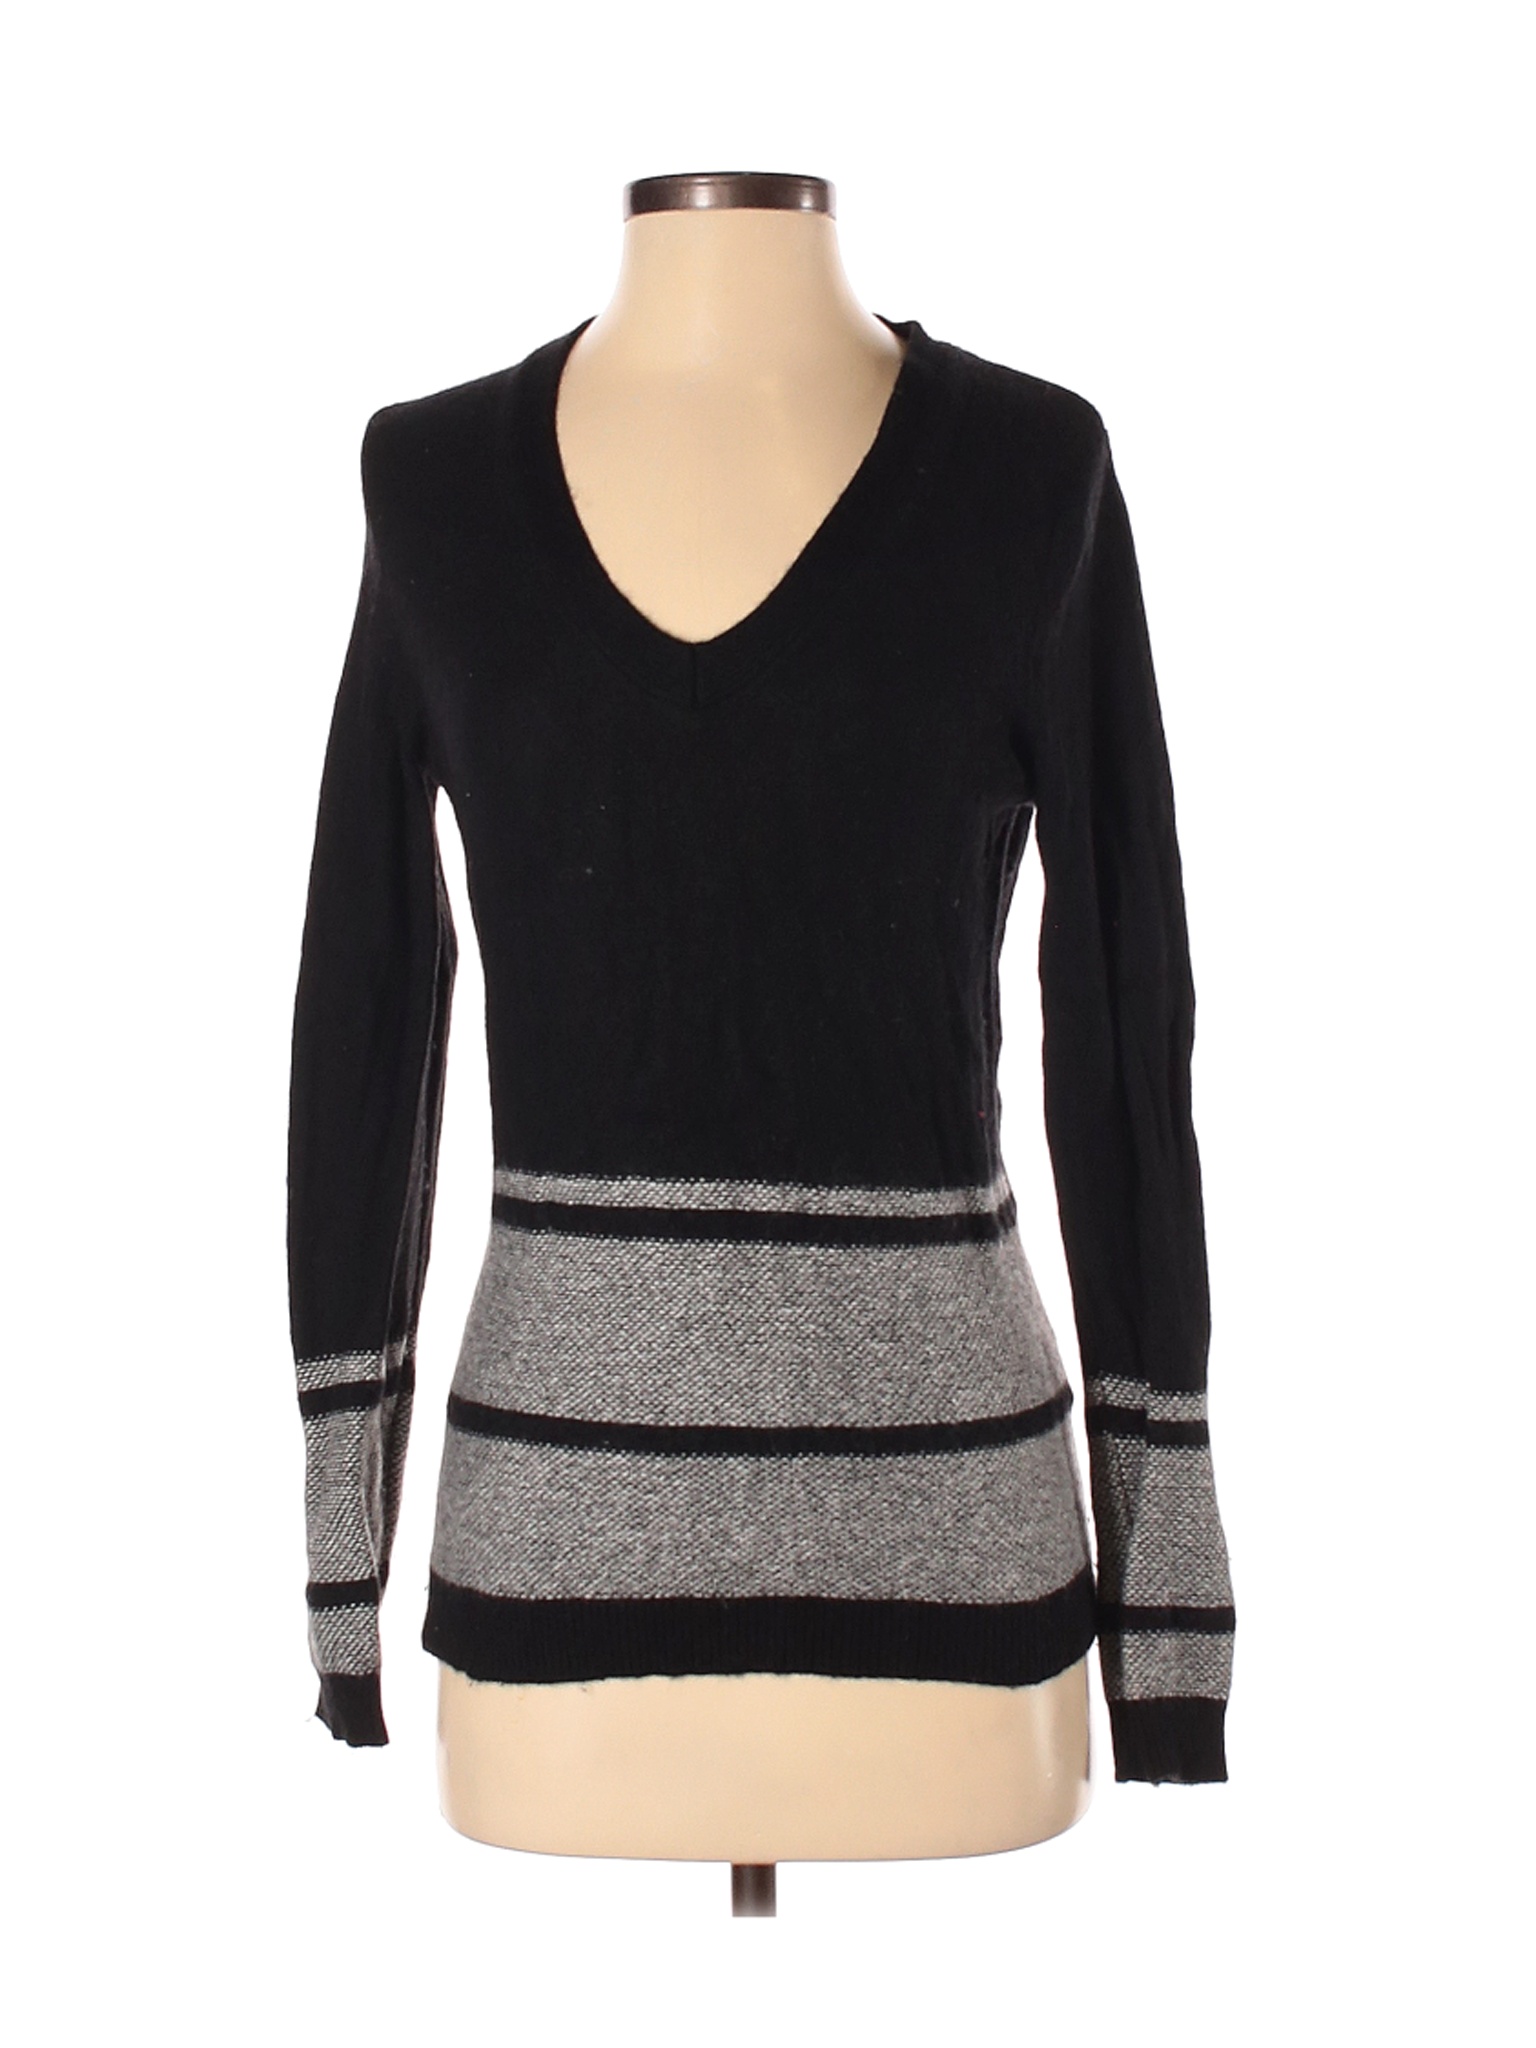 Banana Republic Filpucci Women Black Pullover Sweater S | eBay